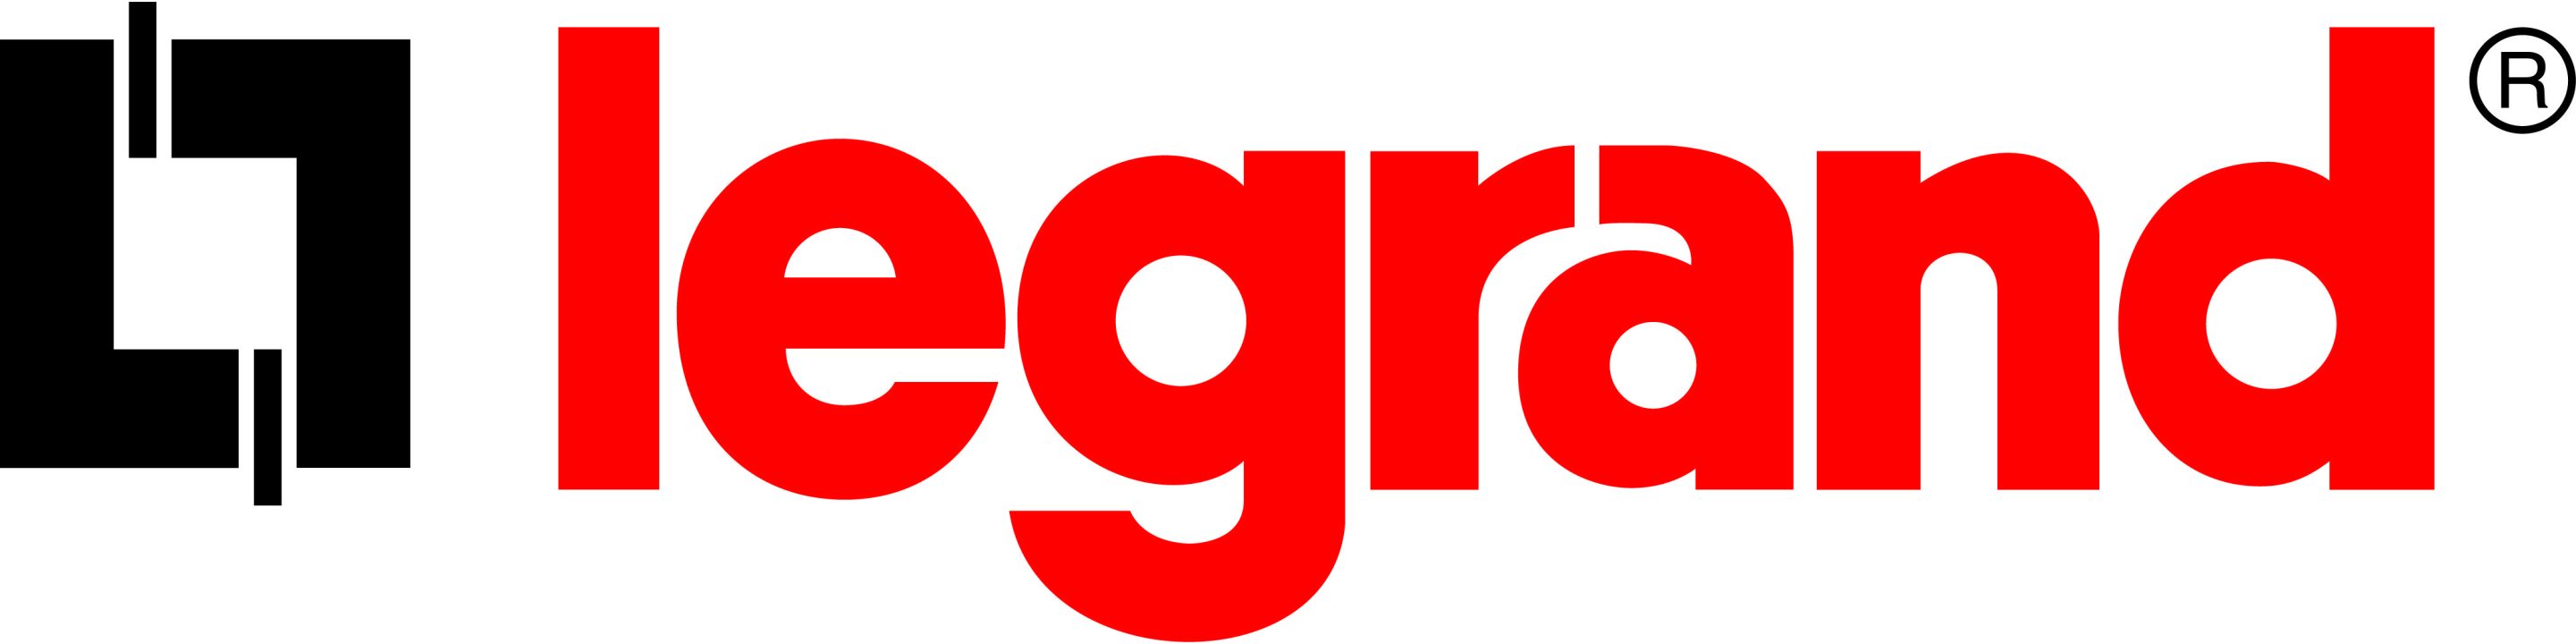 Legrand-Red-JPG